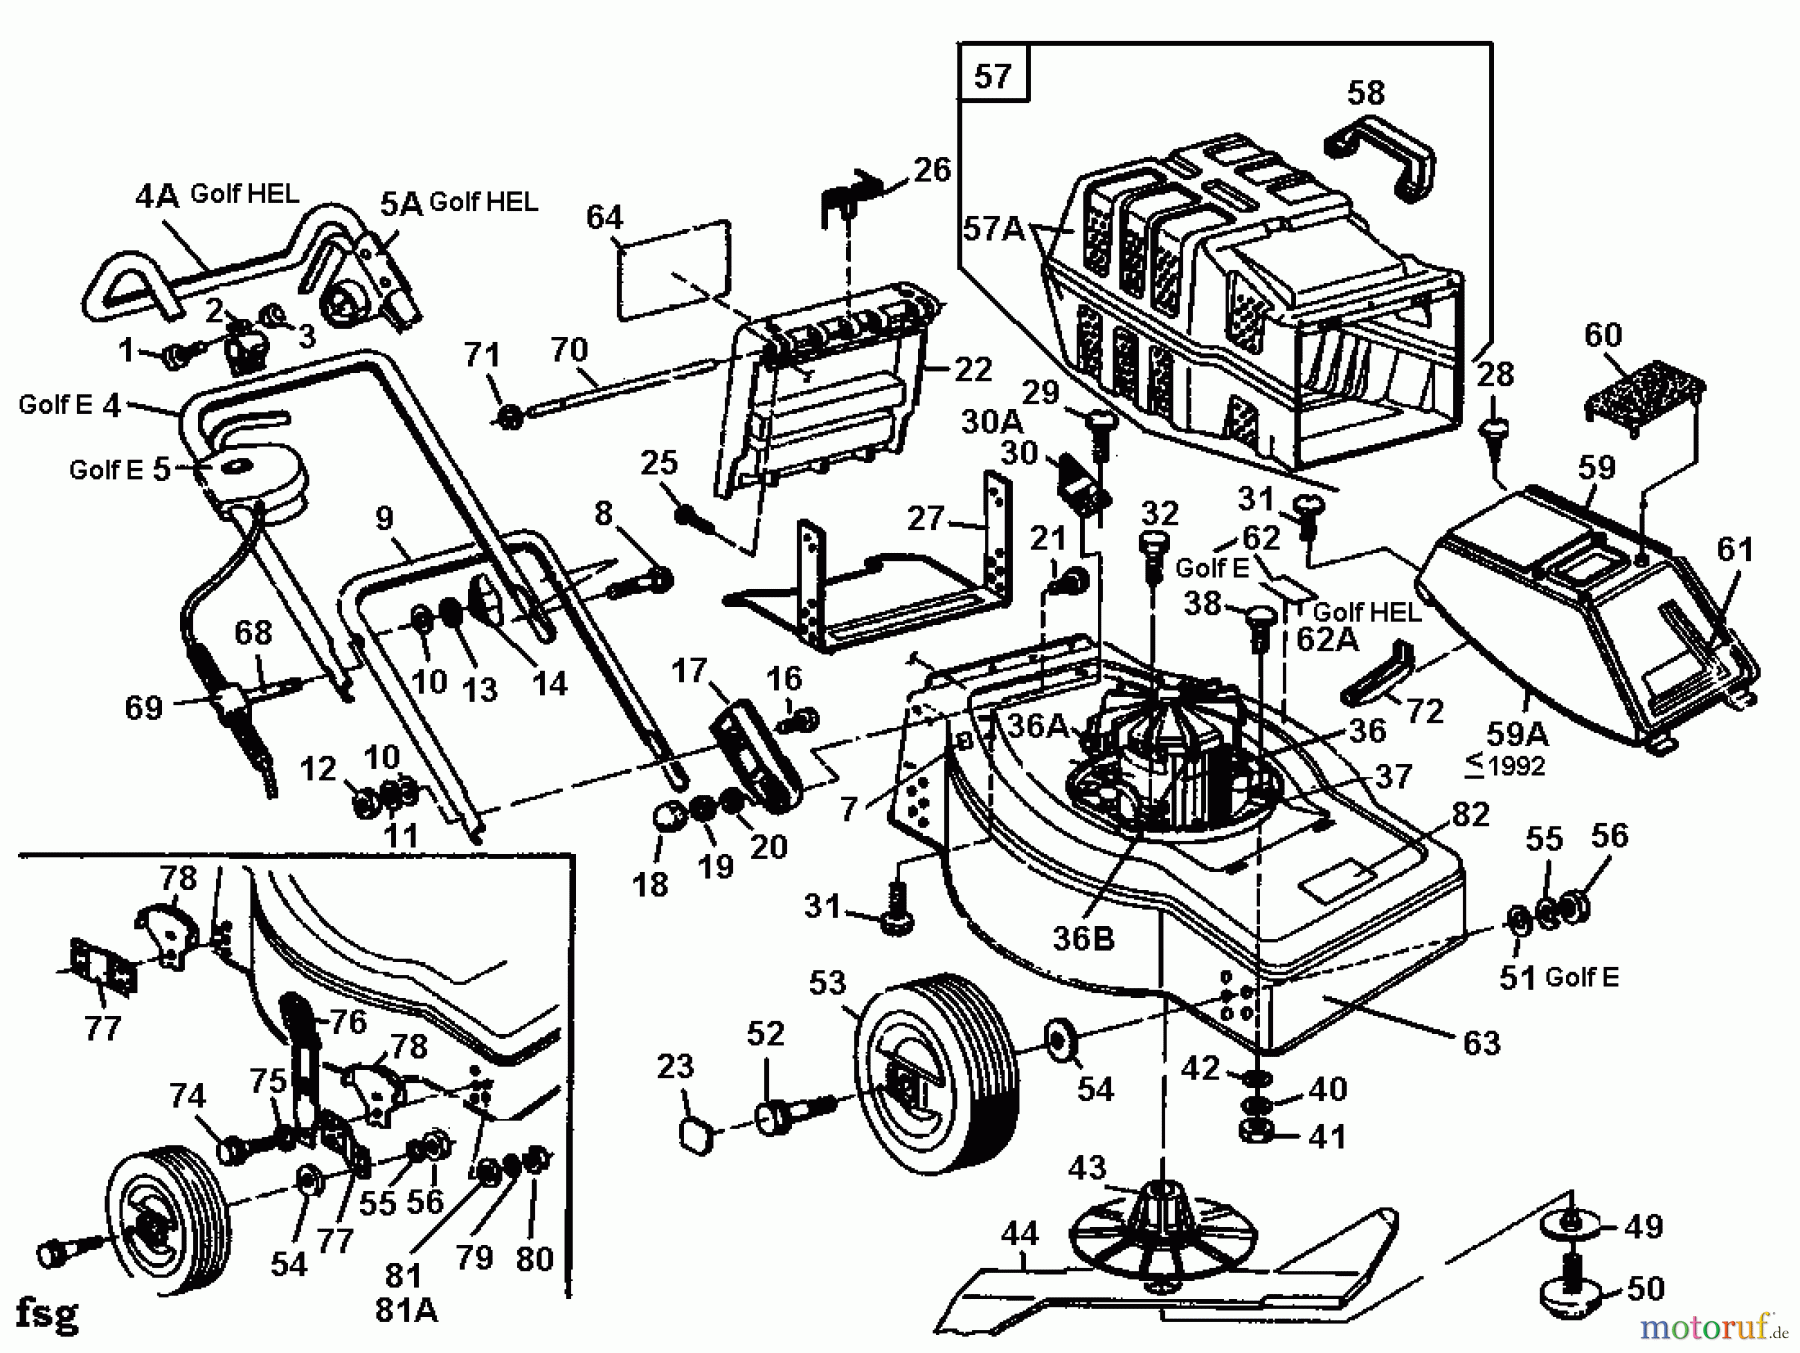  Golf Electric mower Golf HEL 02881.07  (1994) Basic machine